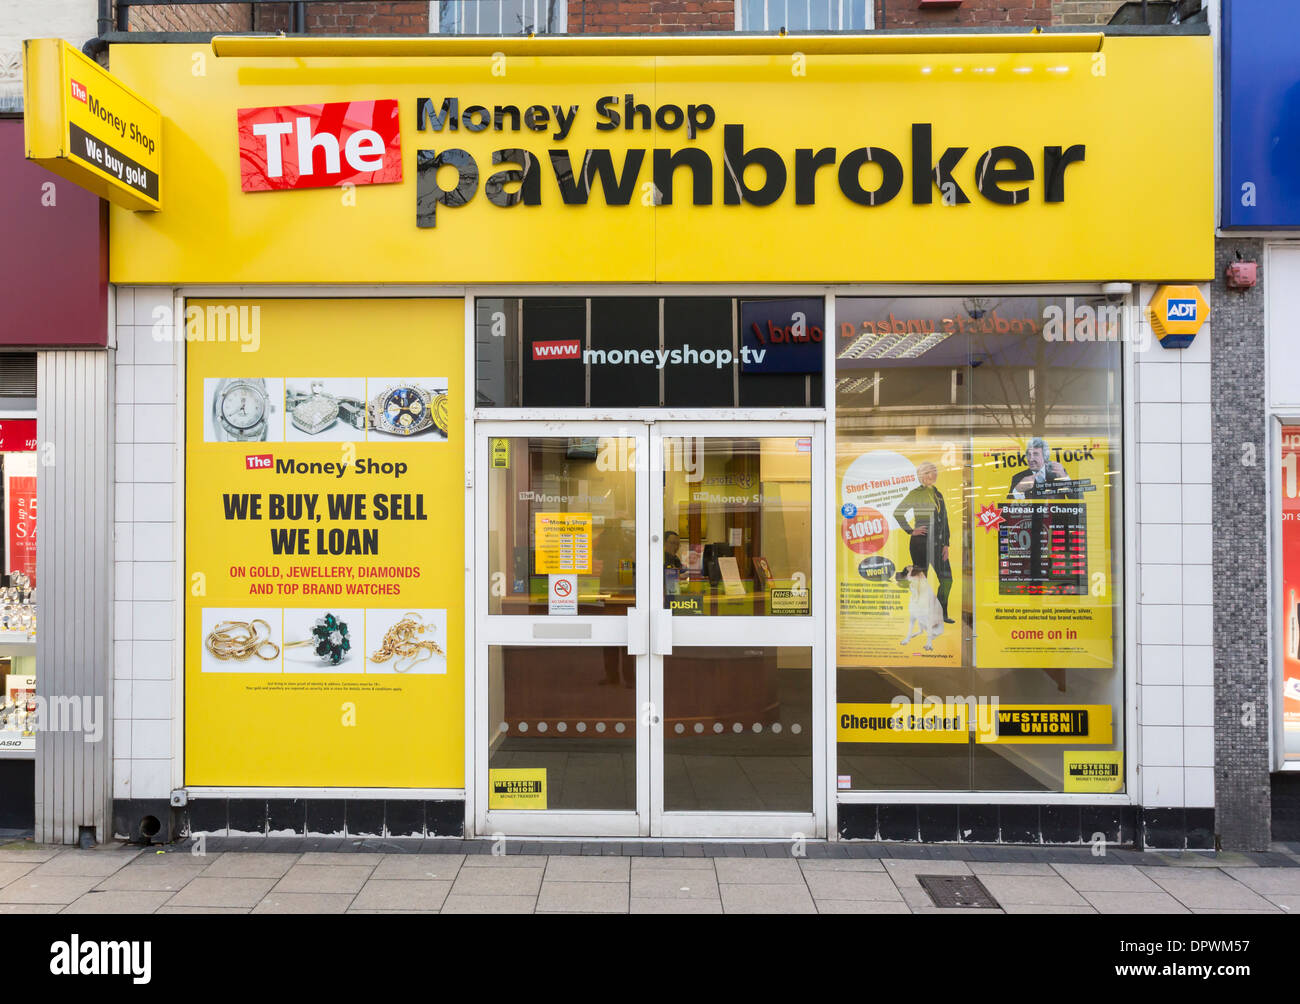 Money Shop Pawnbroker Stock Photo